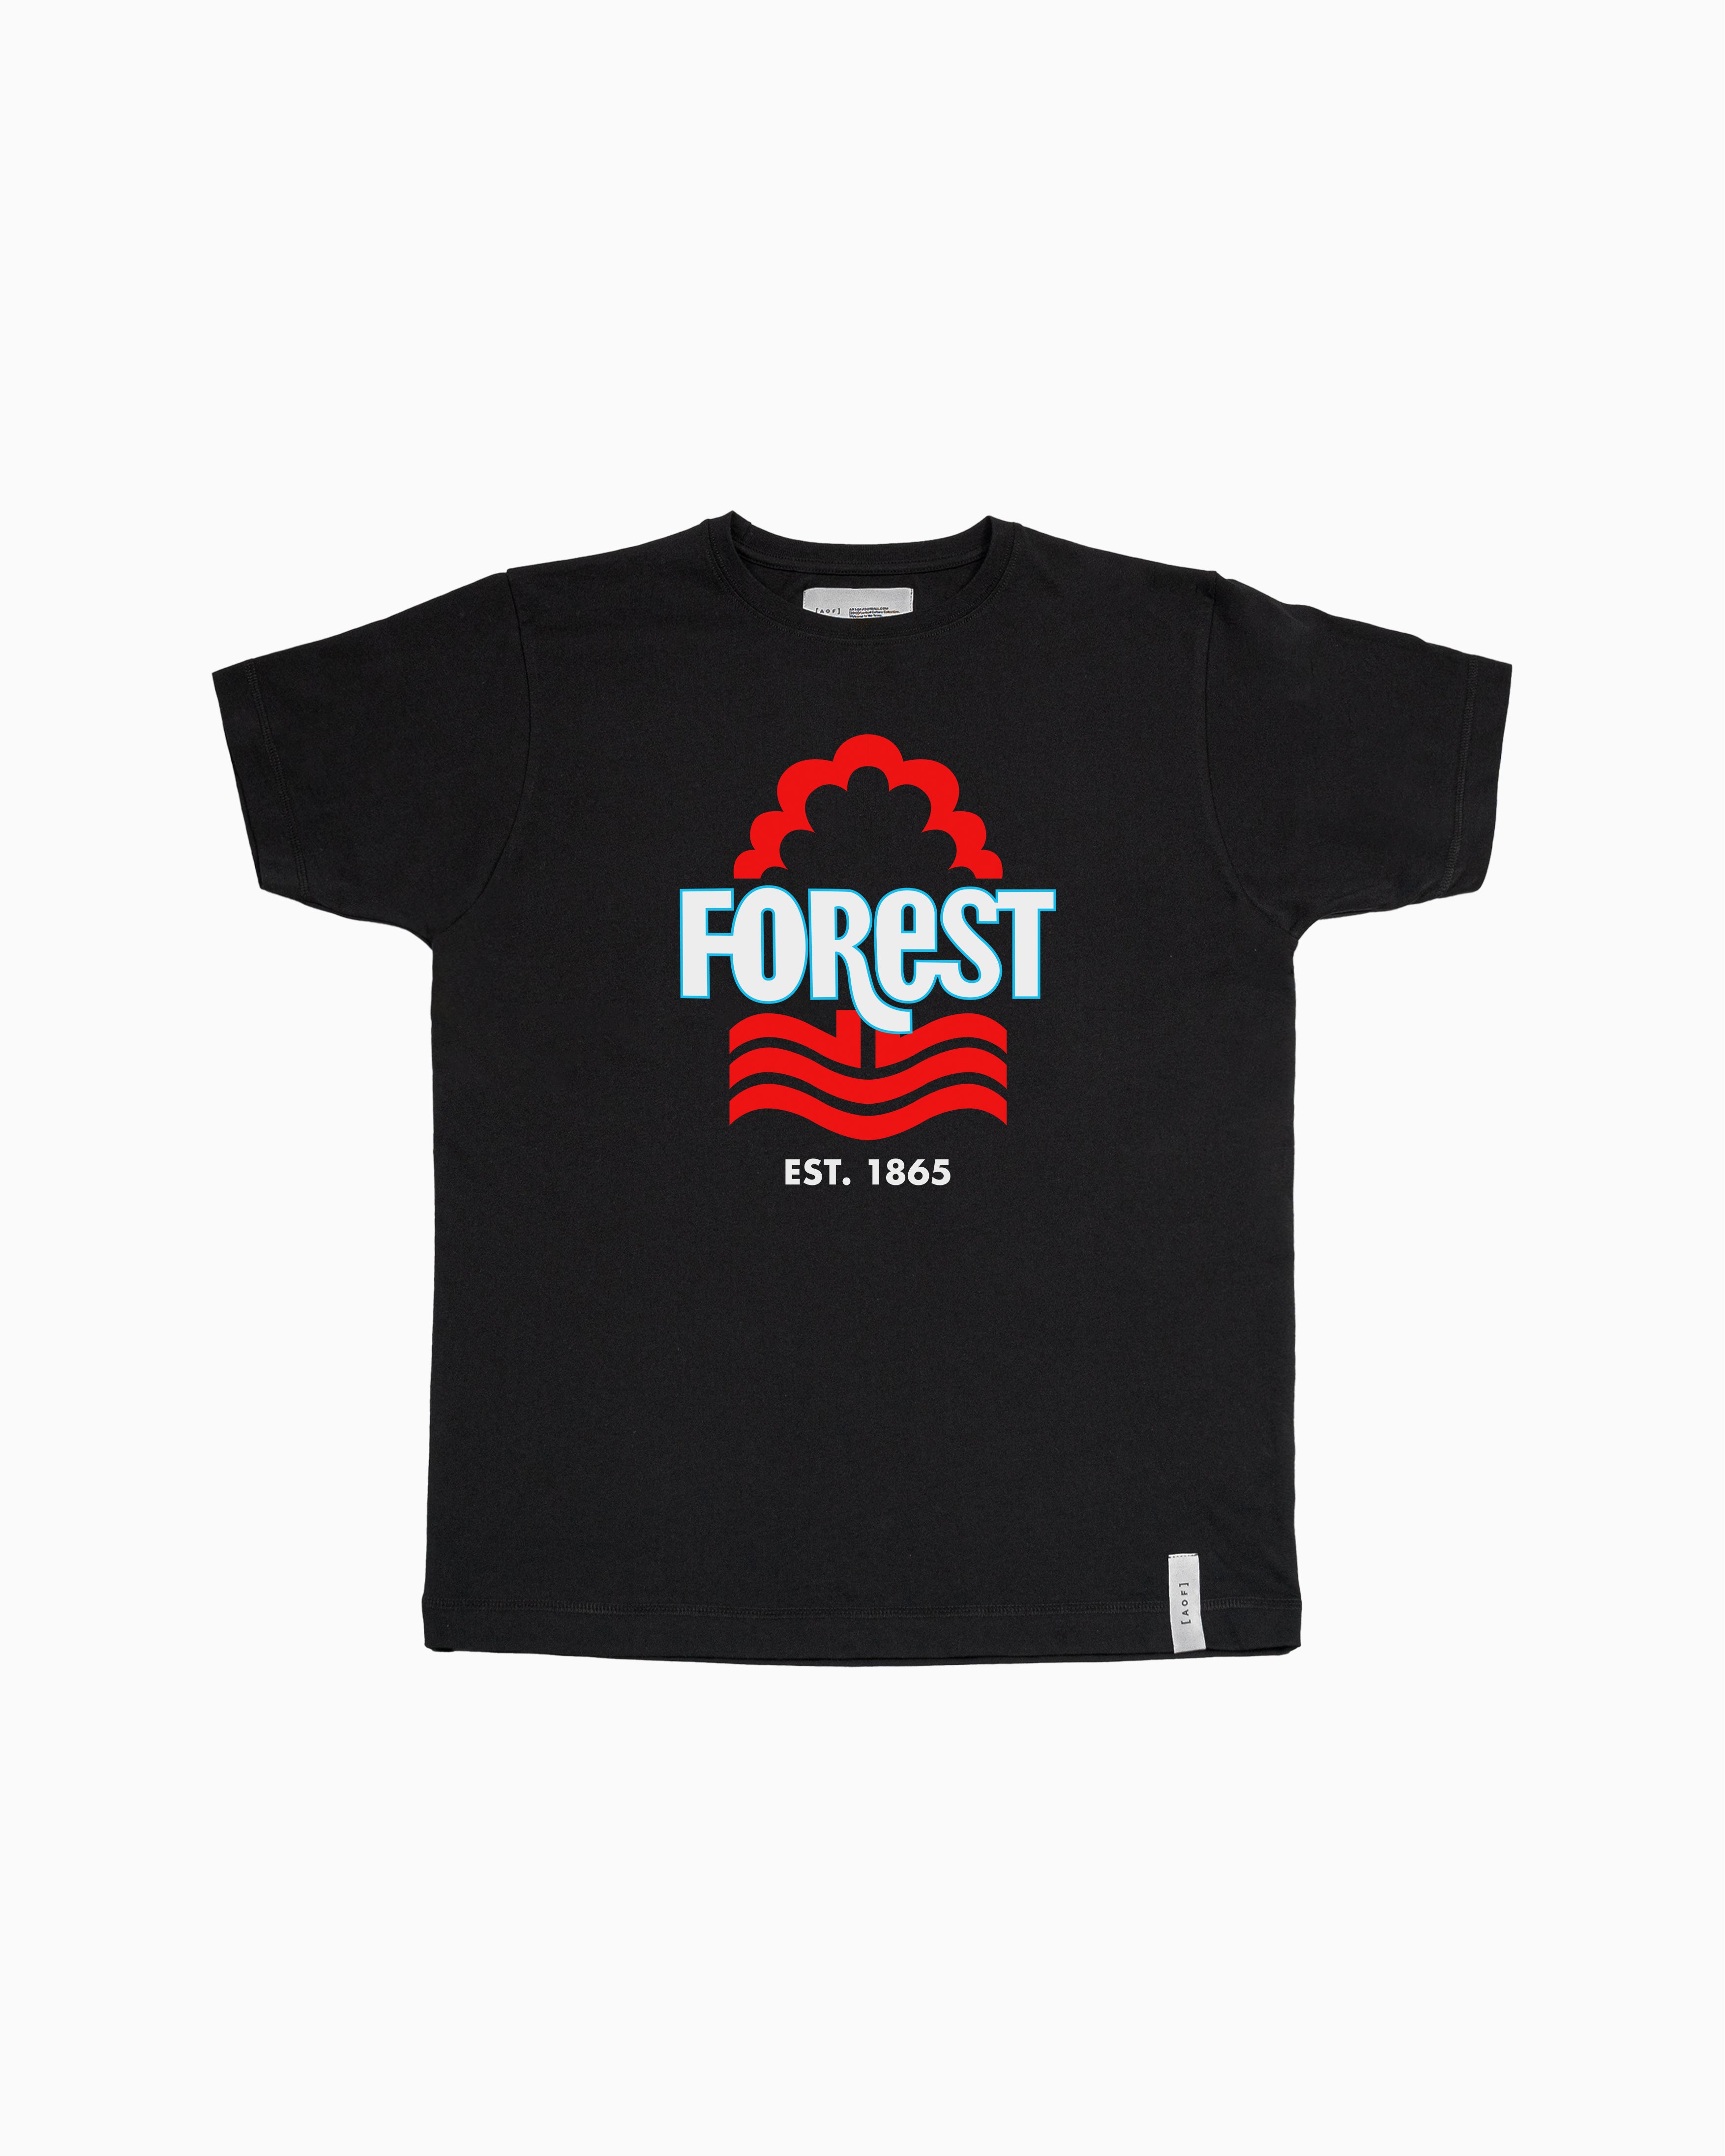 Forest Nostalgia - Tee or Sweat